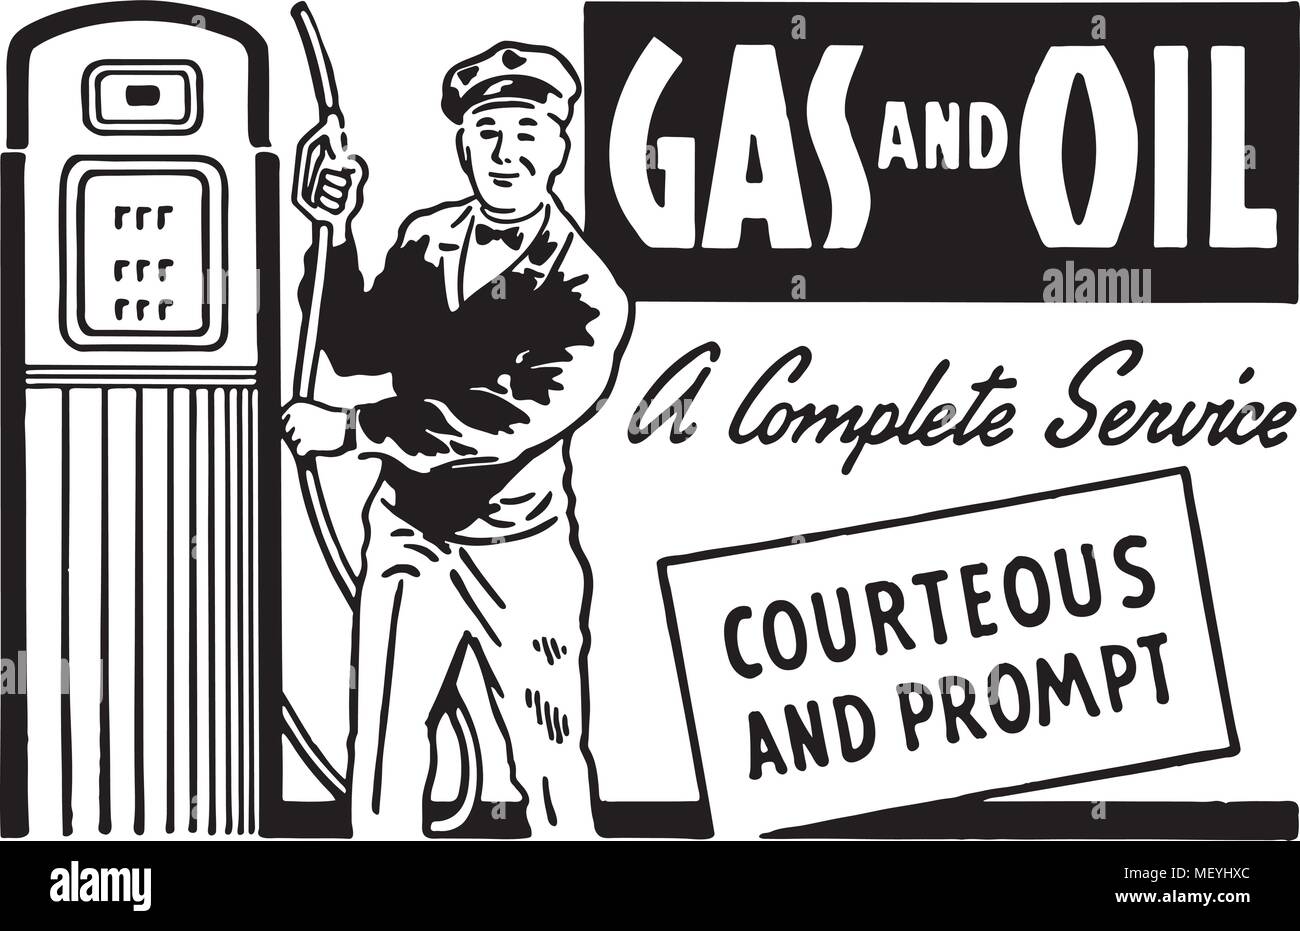 Gas And Oil - Retro Ad Art Banner Stock Vector